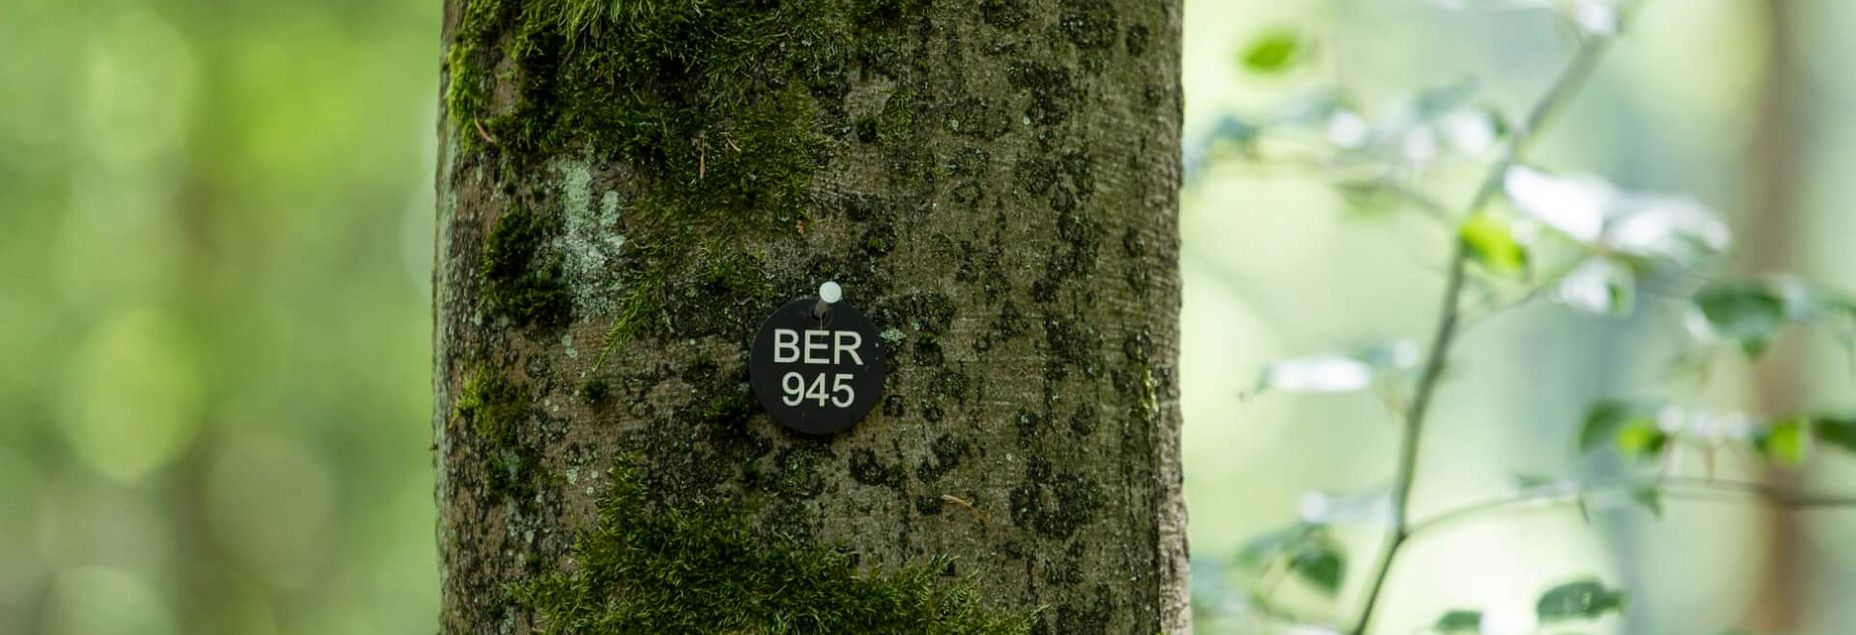 Baum BER 945 - Plakette